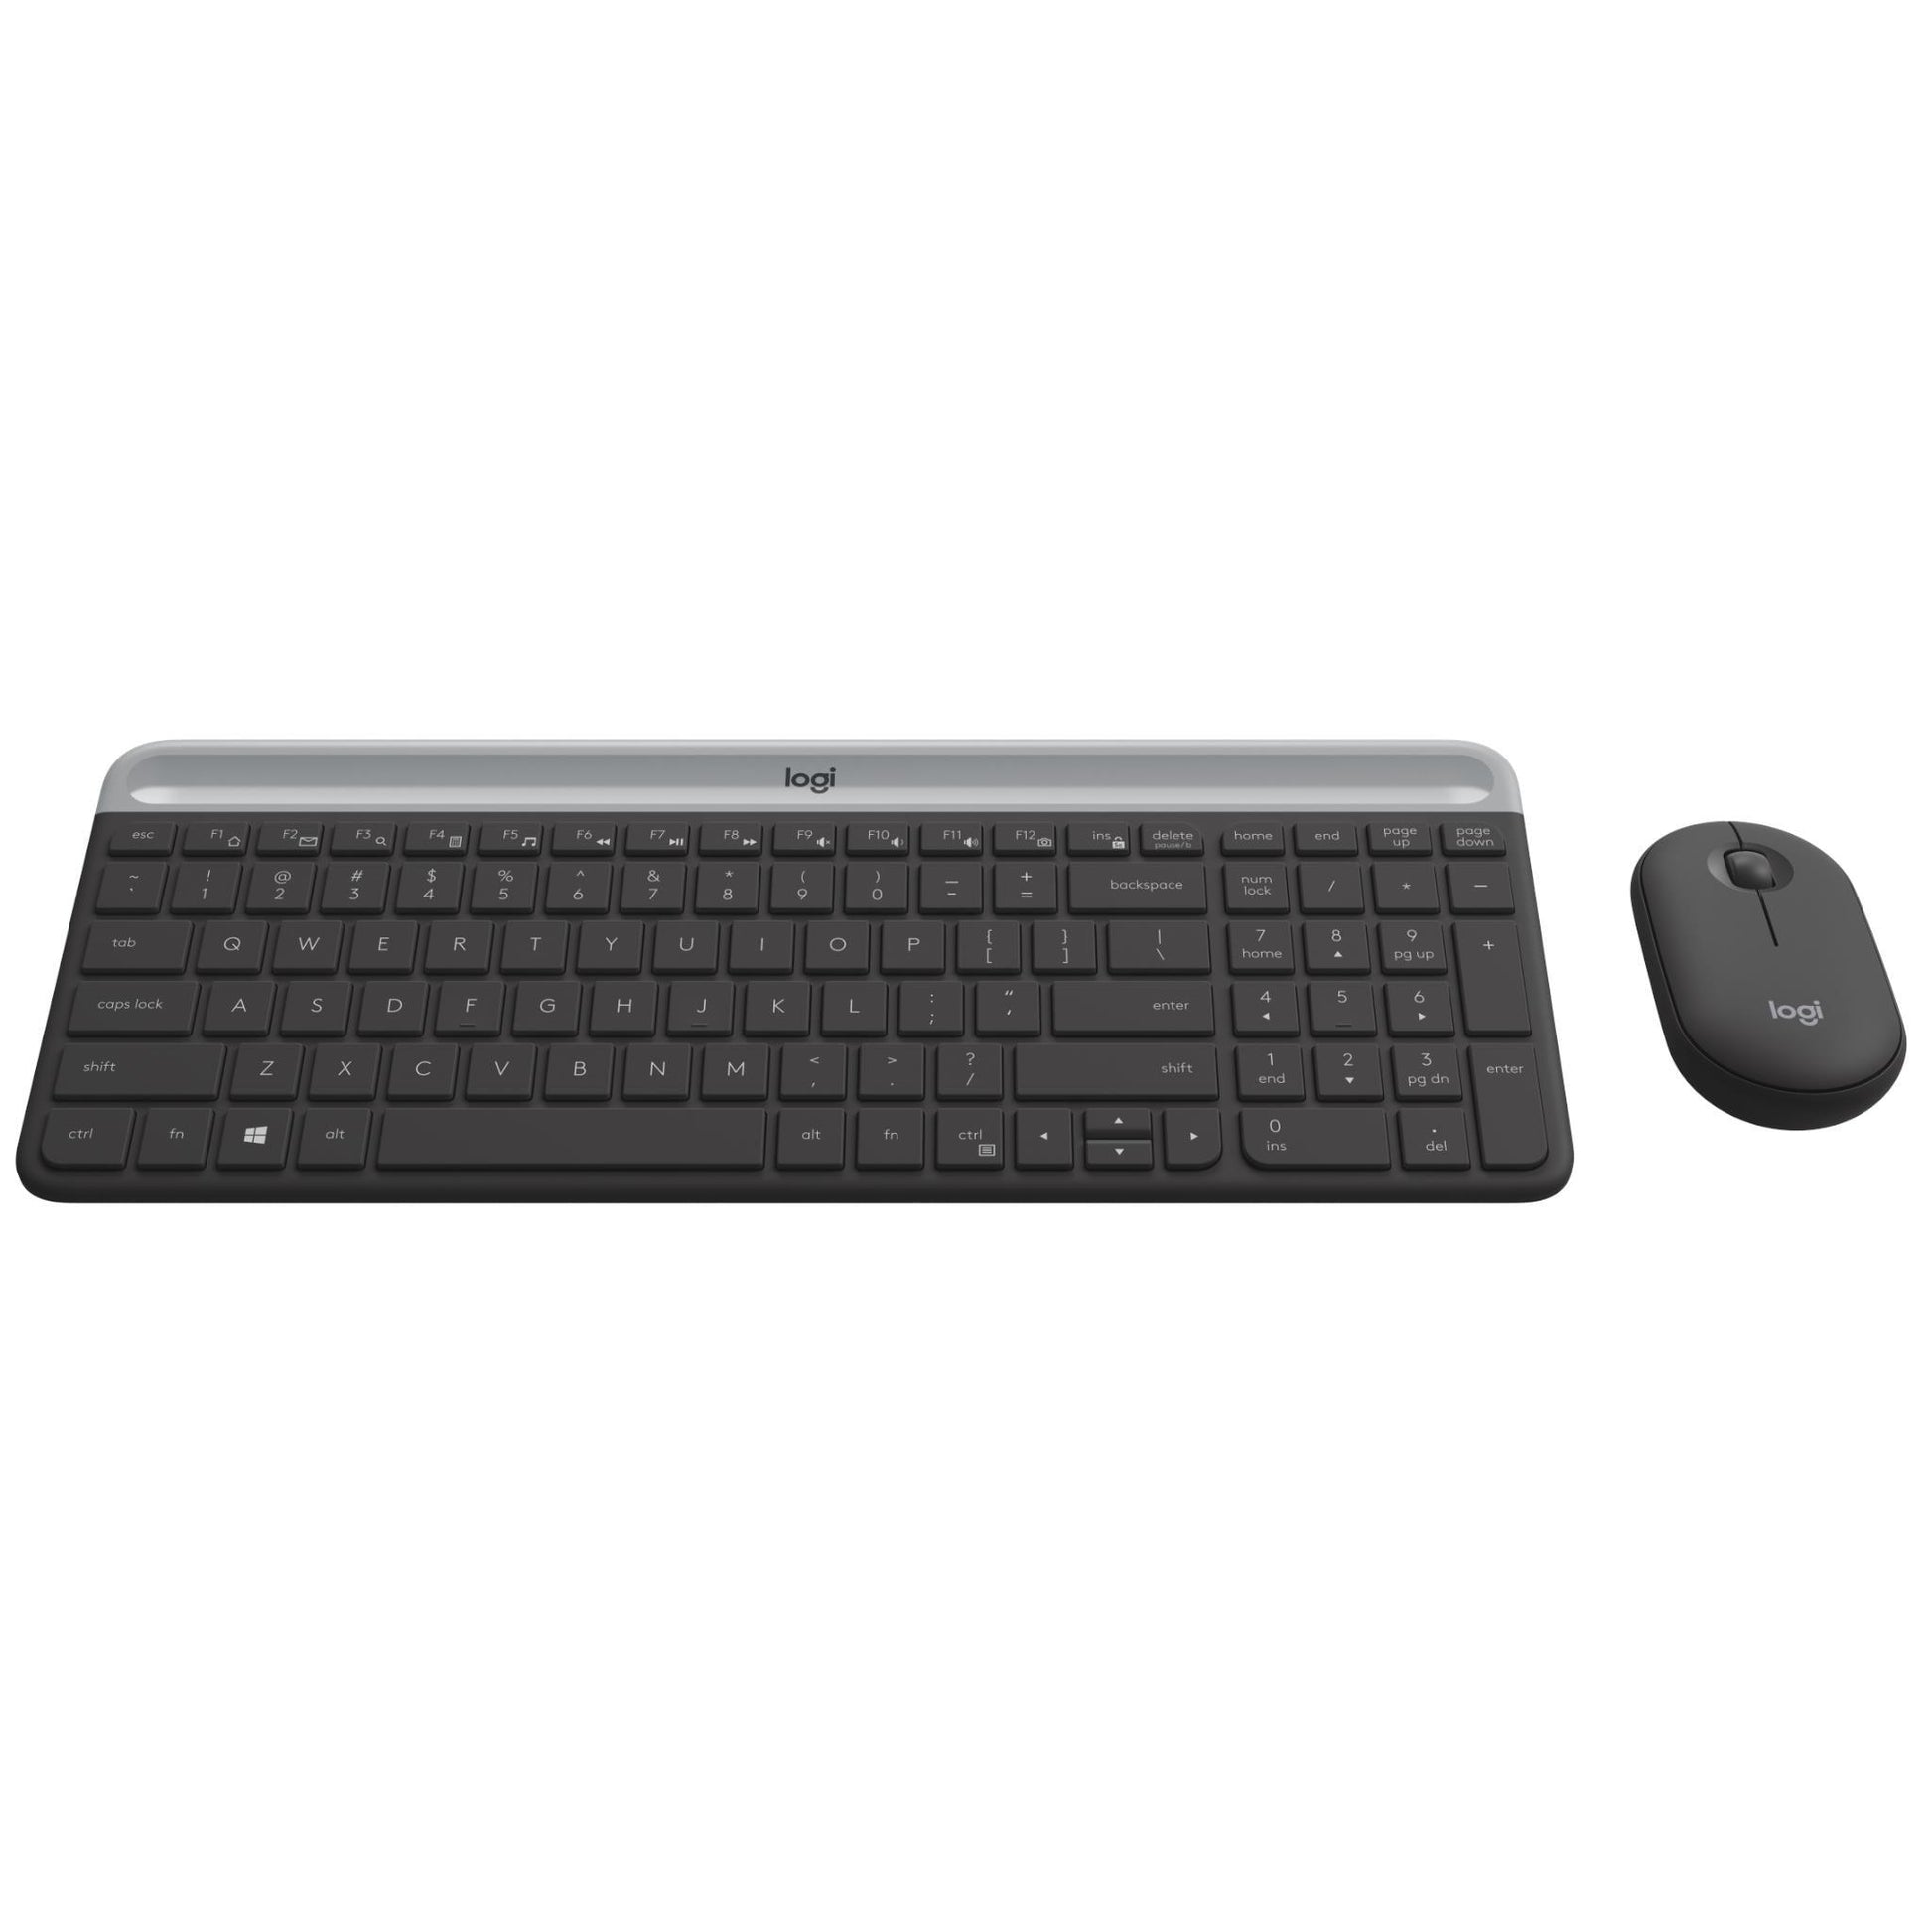 Logitech MK470 Slim Wireless Keyboard and Mouse Combo - Black - Marknet Technology